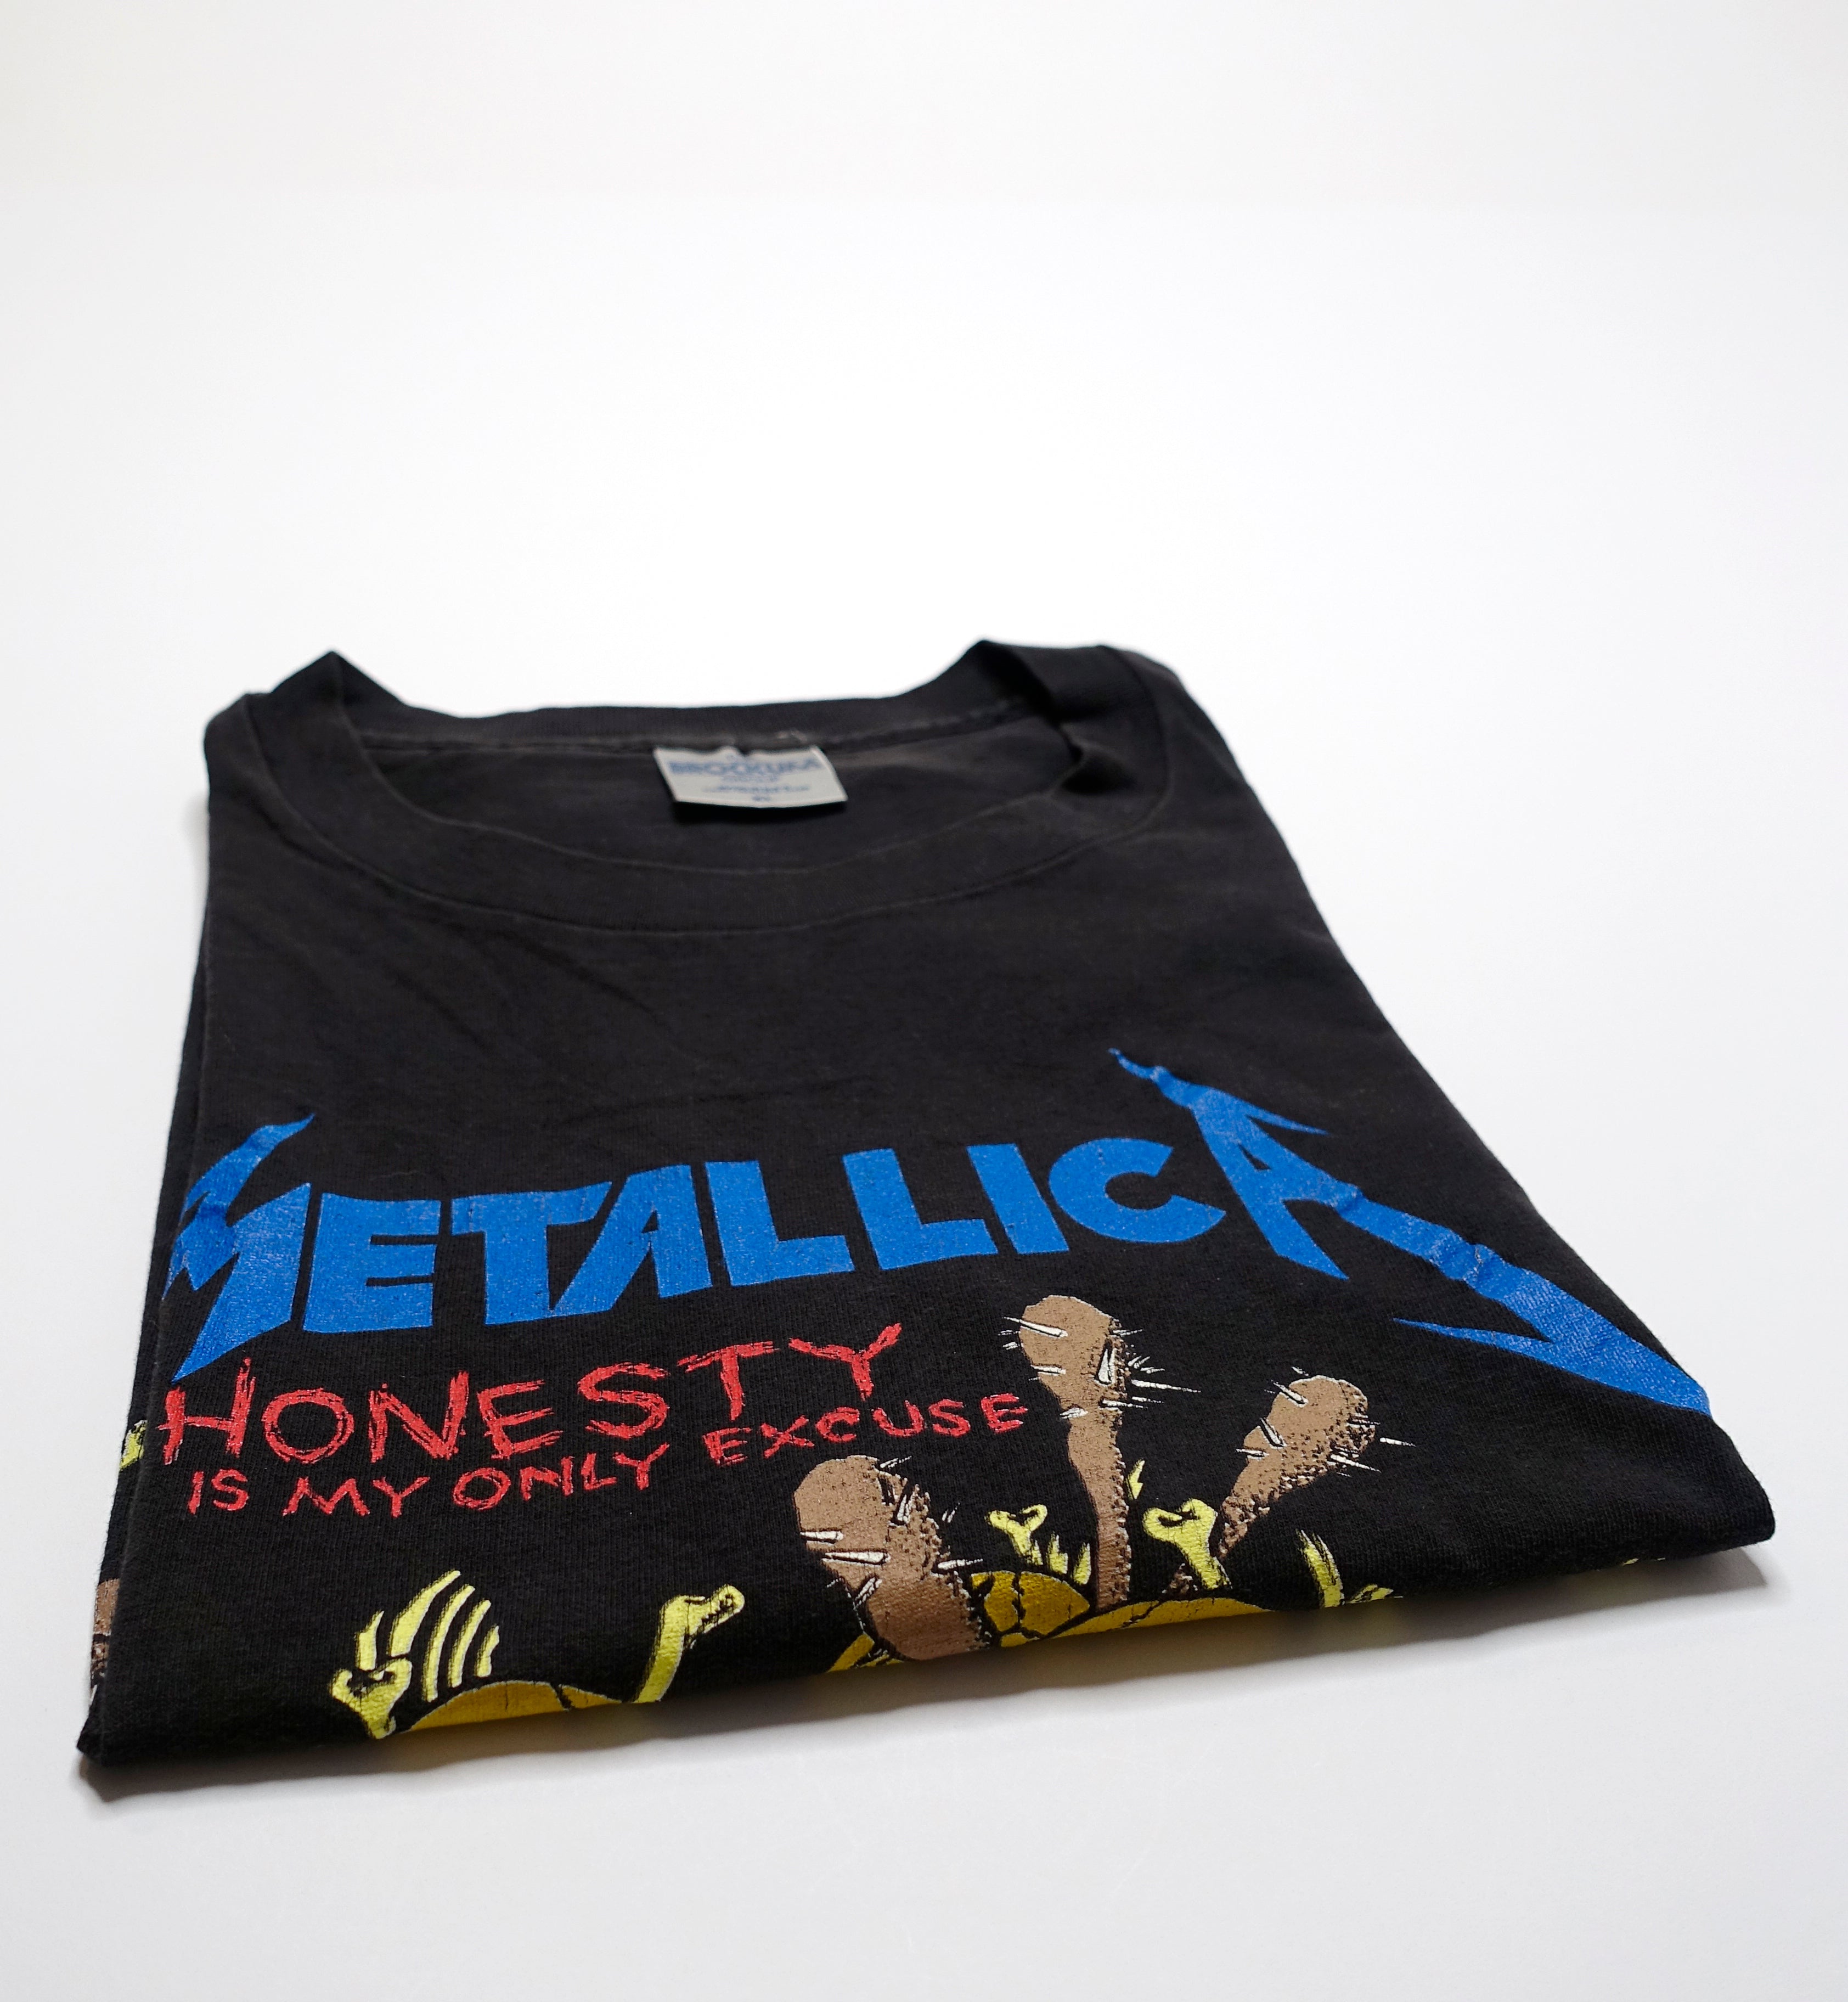 Metallica - Damage Inc. (Reverse Mis-press) 1994 Tour Shirt Size XL (Pushead Design)